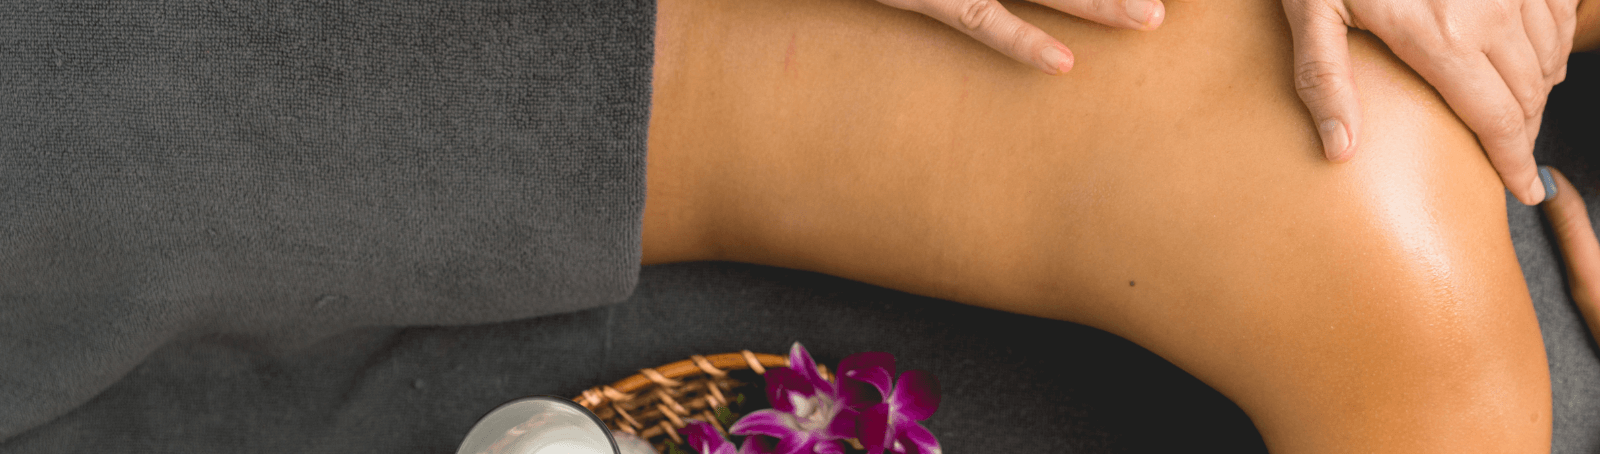 The Healing Benefits of Thai Massage in Bangkok’s Spas